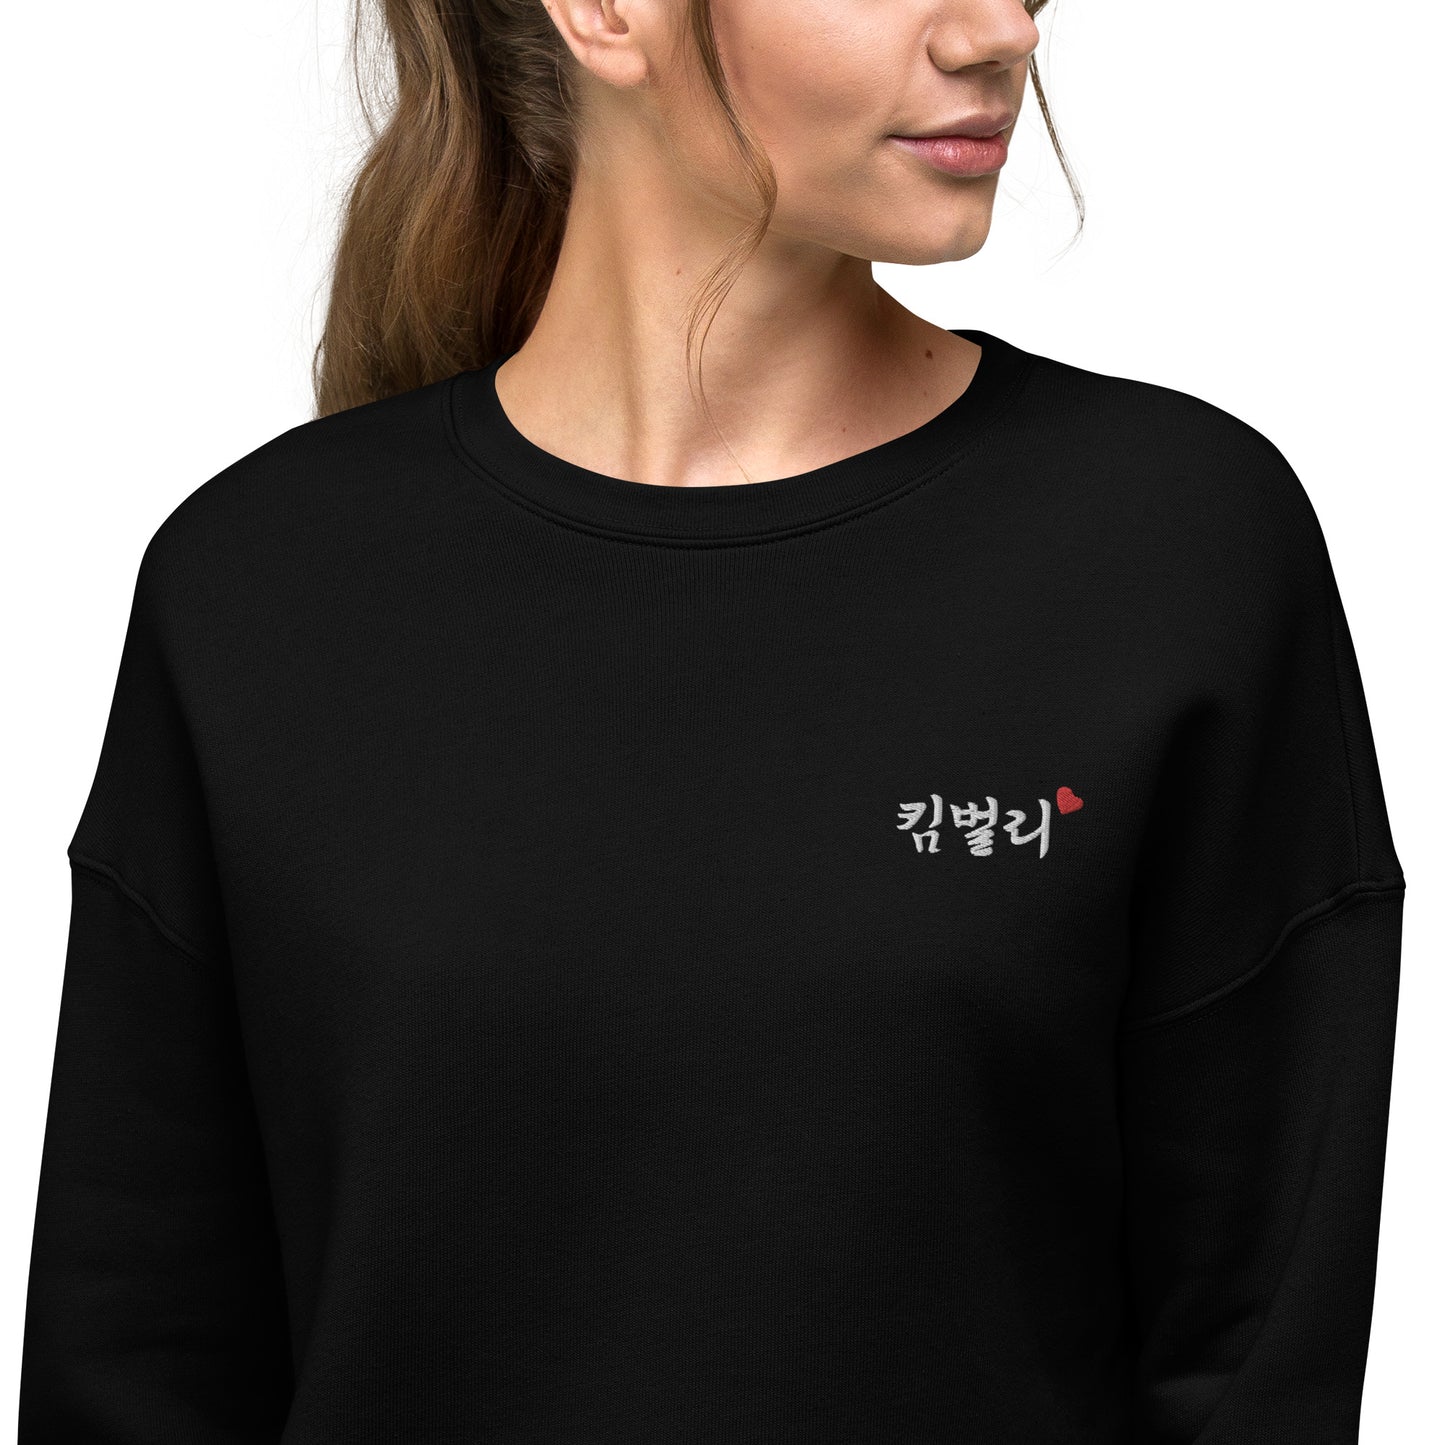 Kimberly Korean Name Embroidery Women's Cropped Sweatshirt